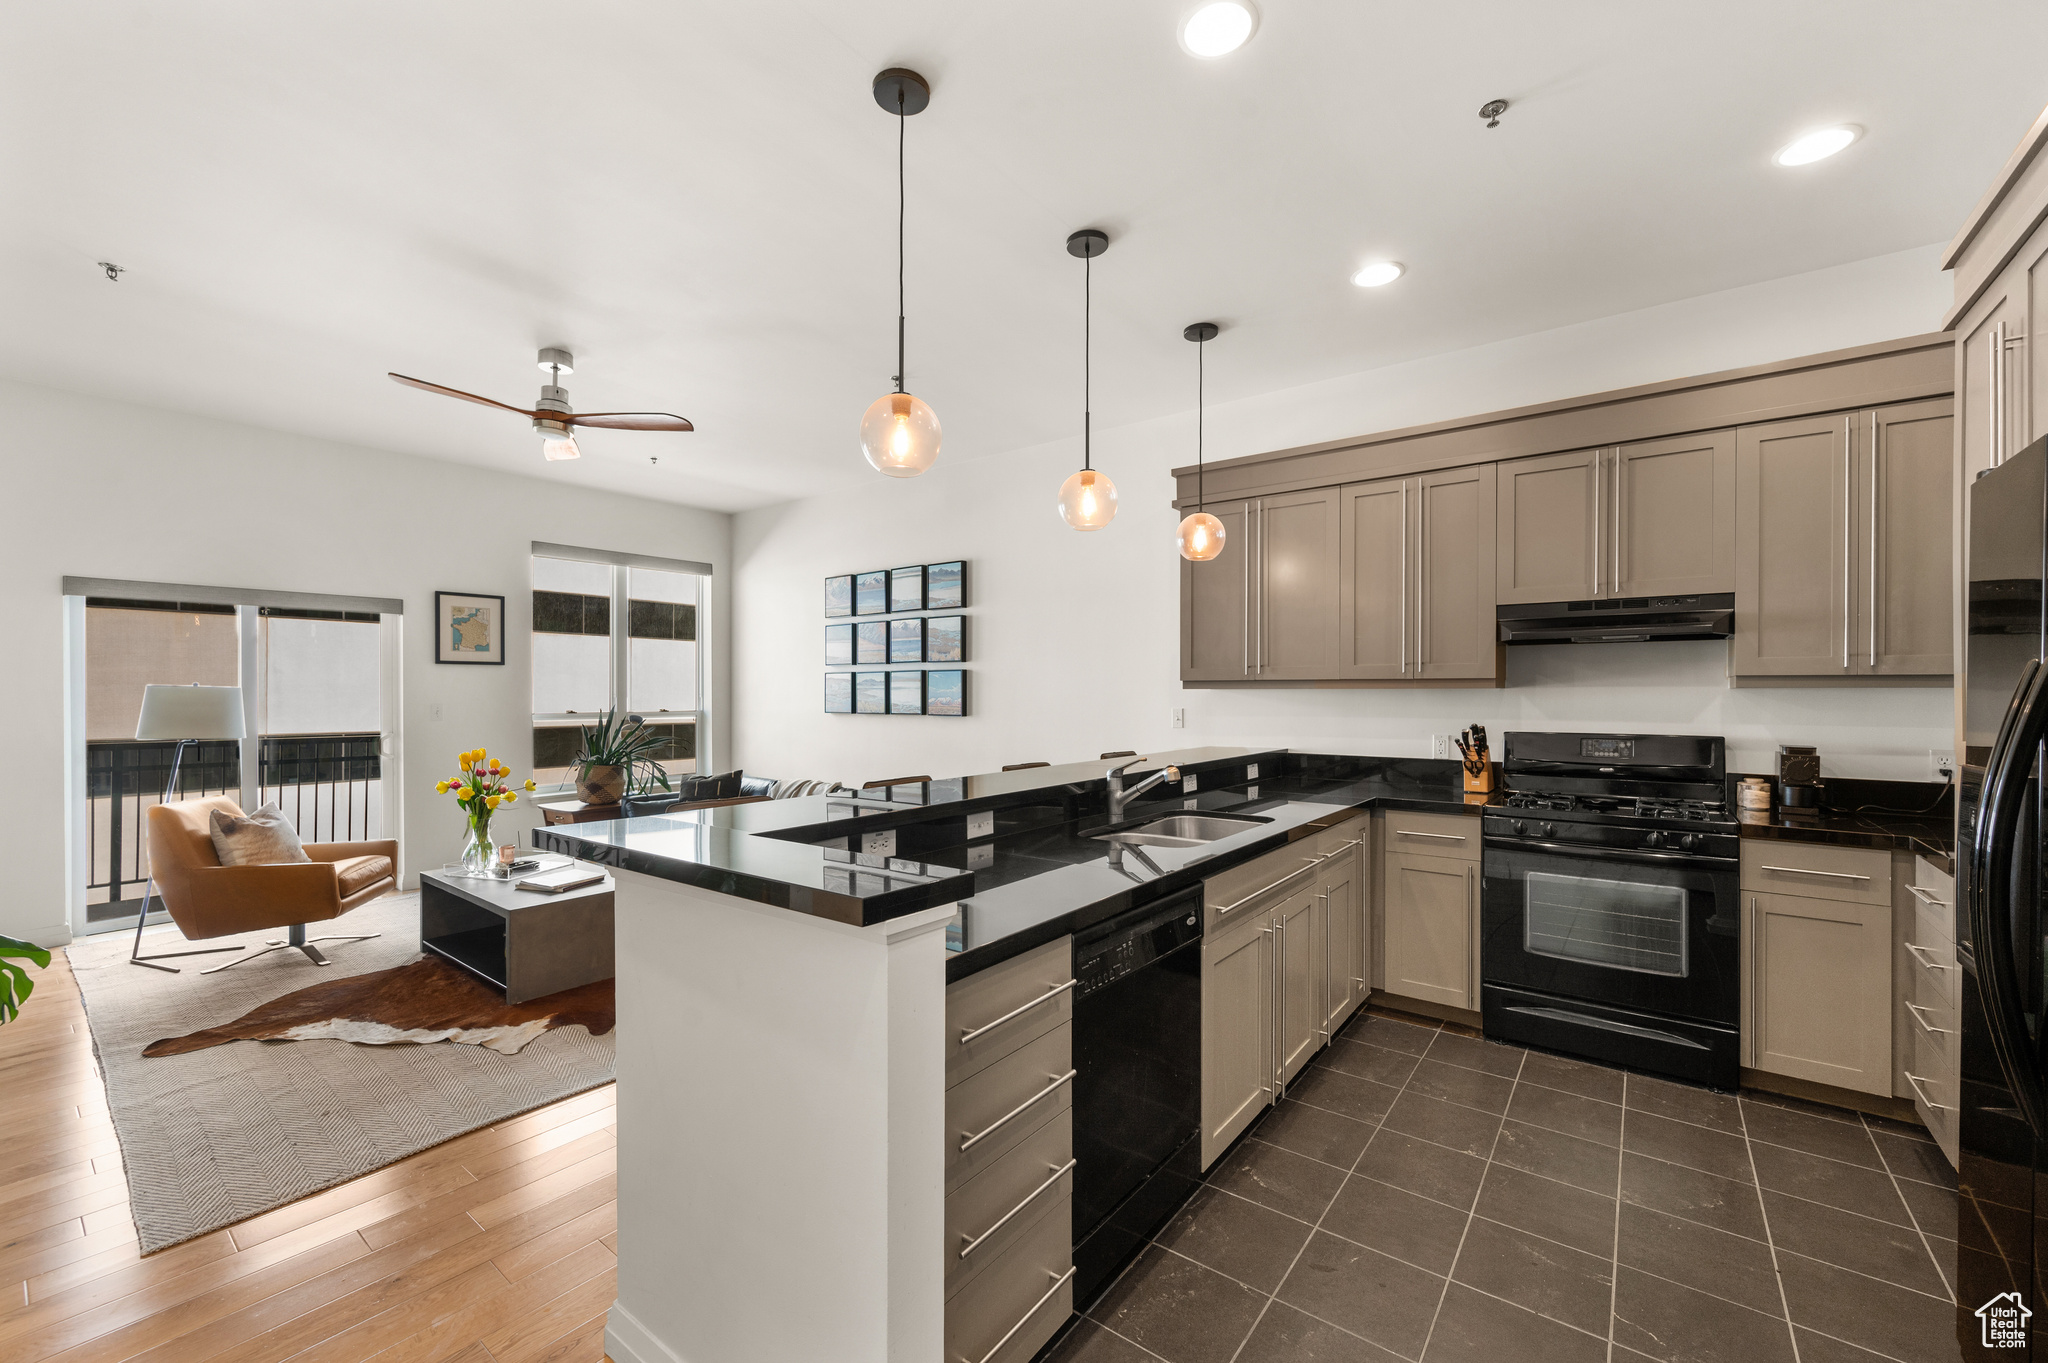 Kitchen featuring dark tile floors, black appliances, kitchen peninsula, sink, and ceiling fan